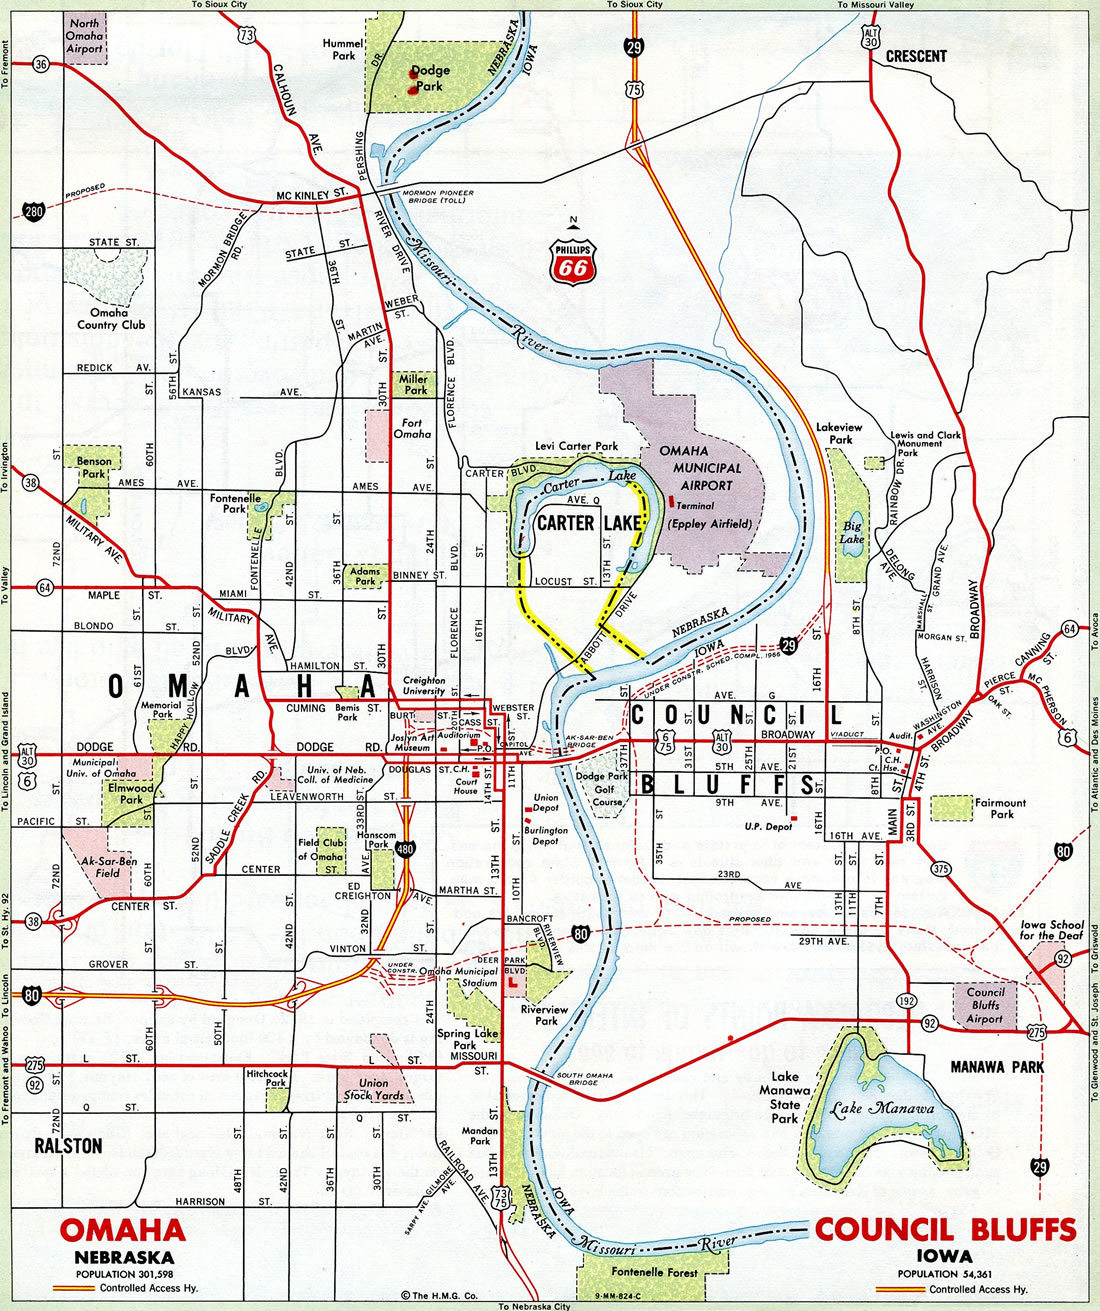 Omaha, Nebraska and Council Bluffs, Iowa in 1965.